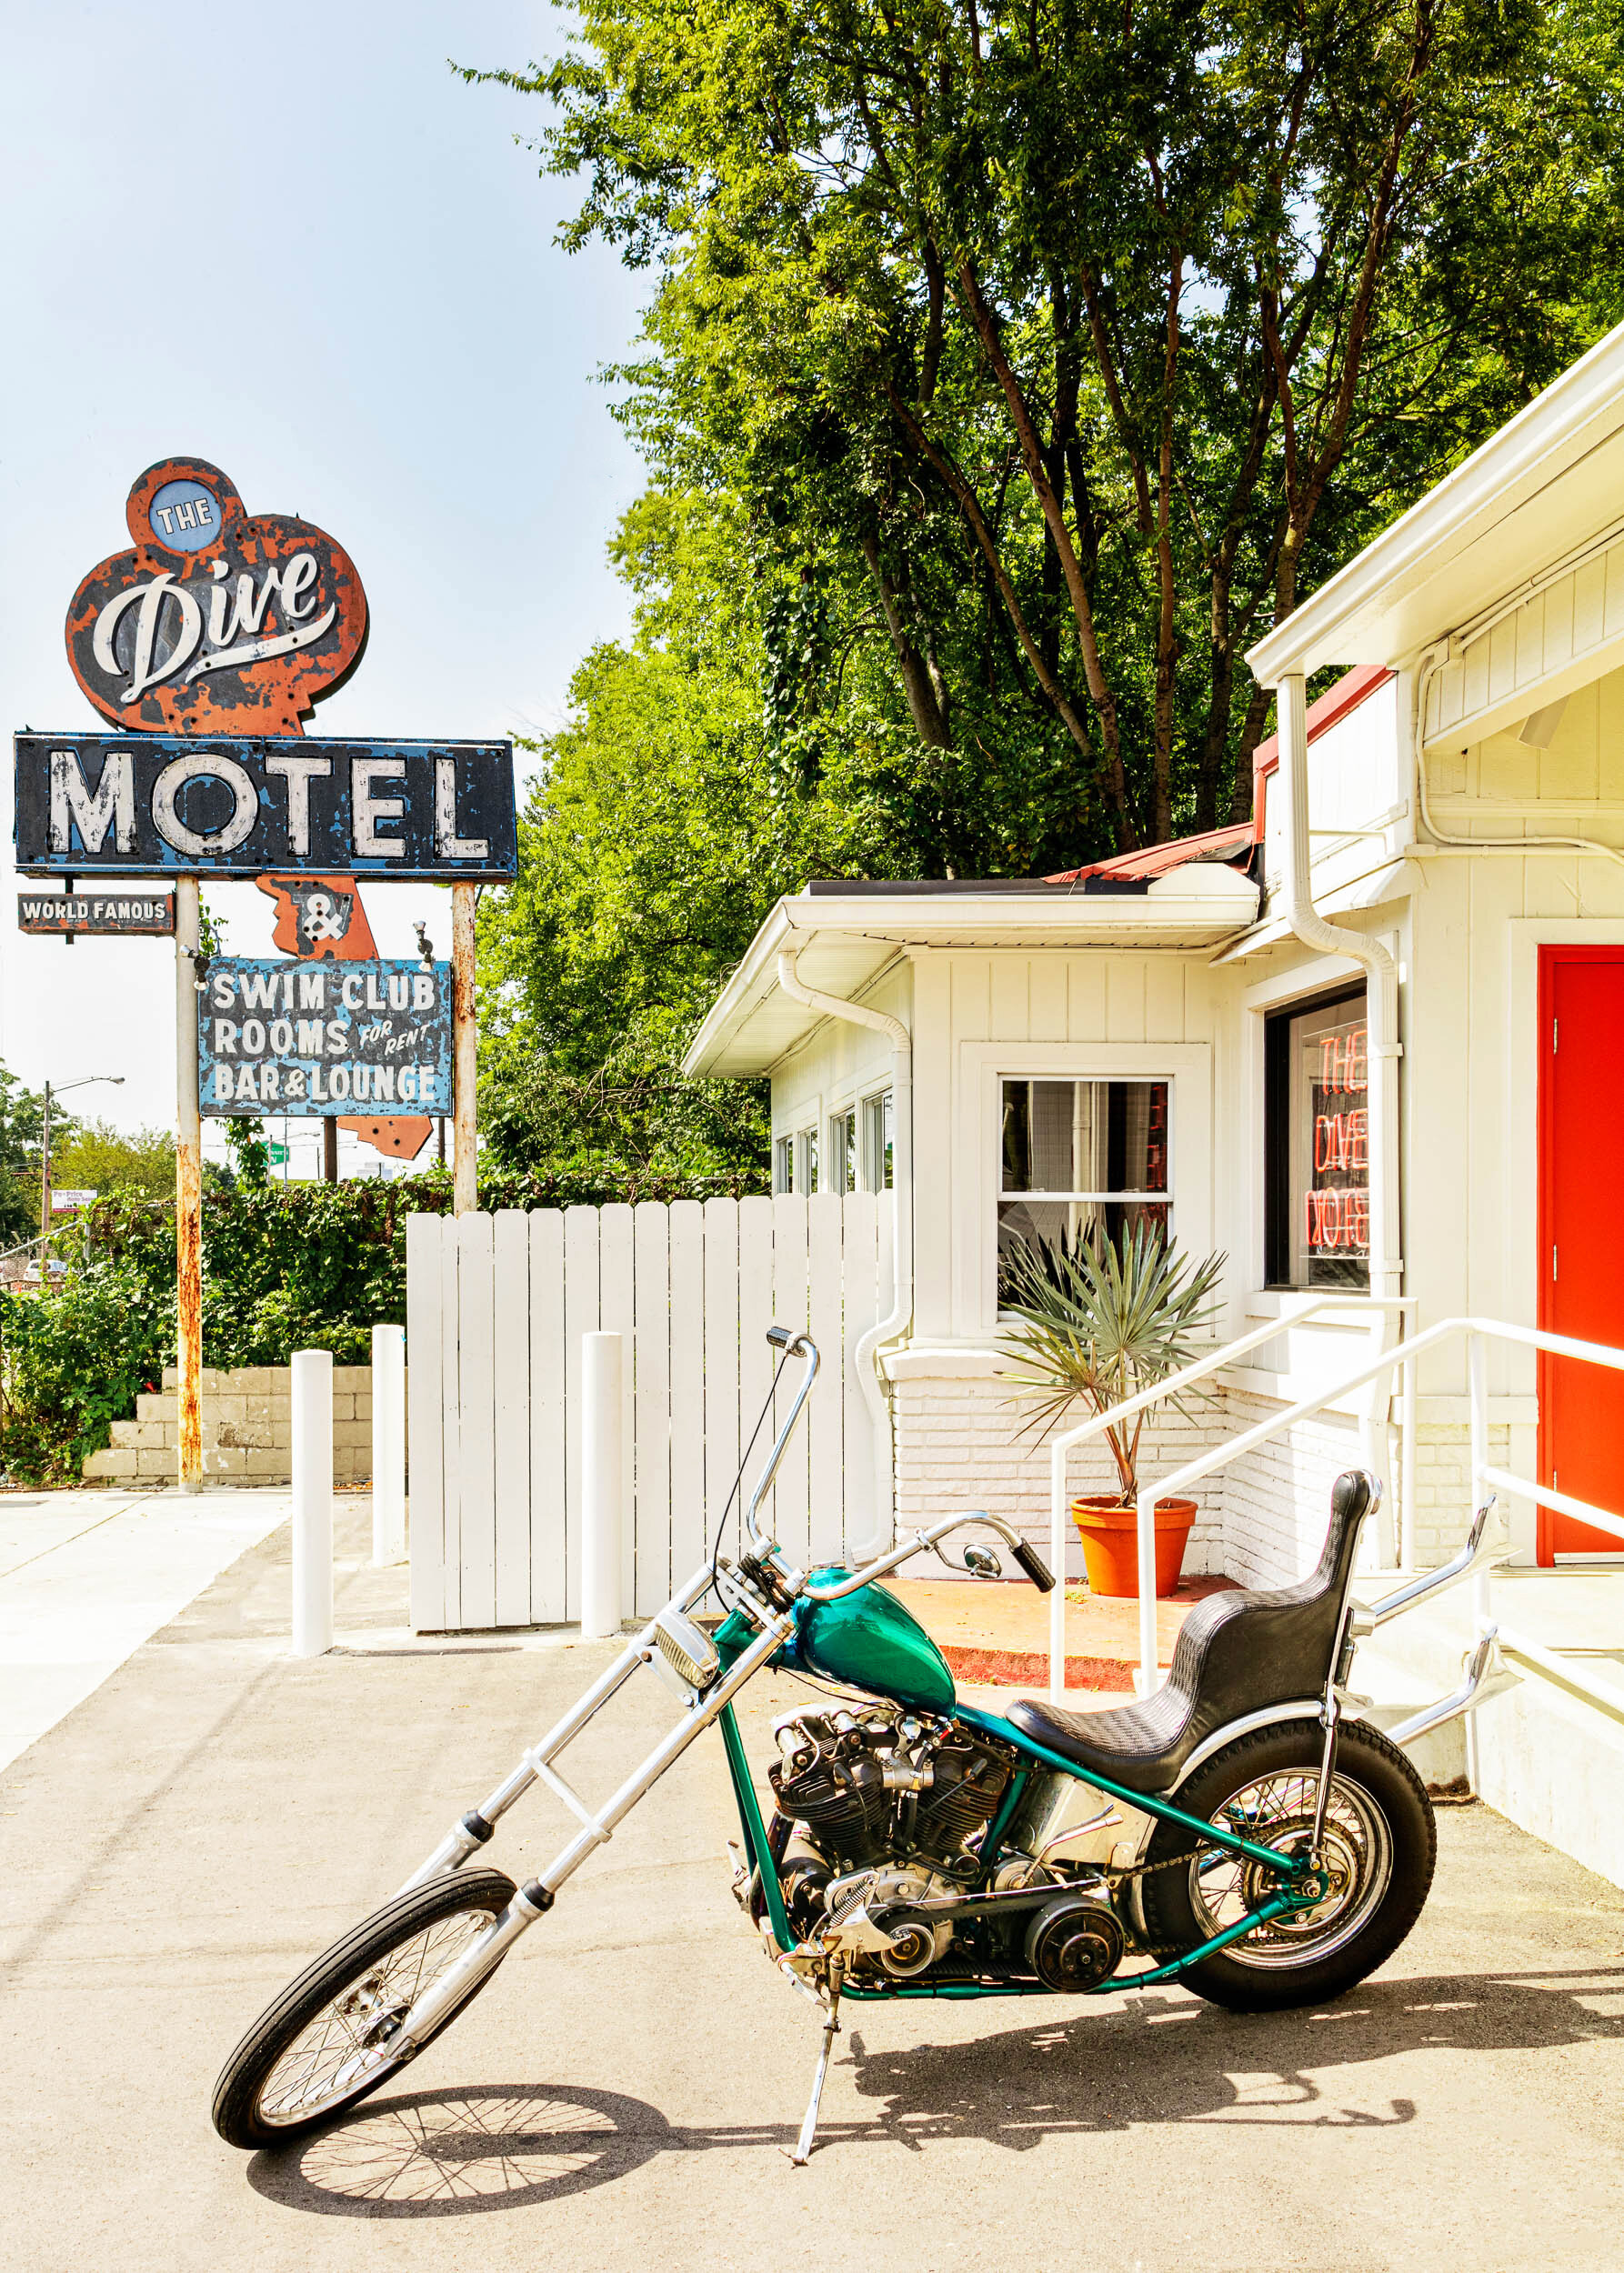  The Dive Motel Nashville   